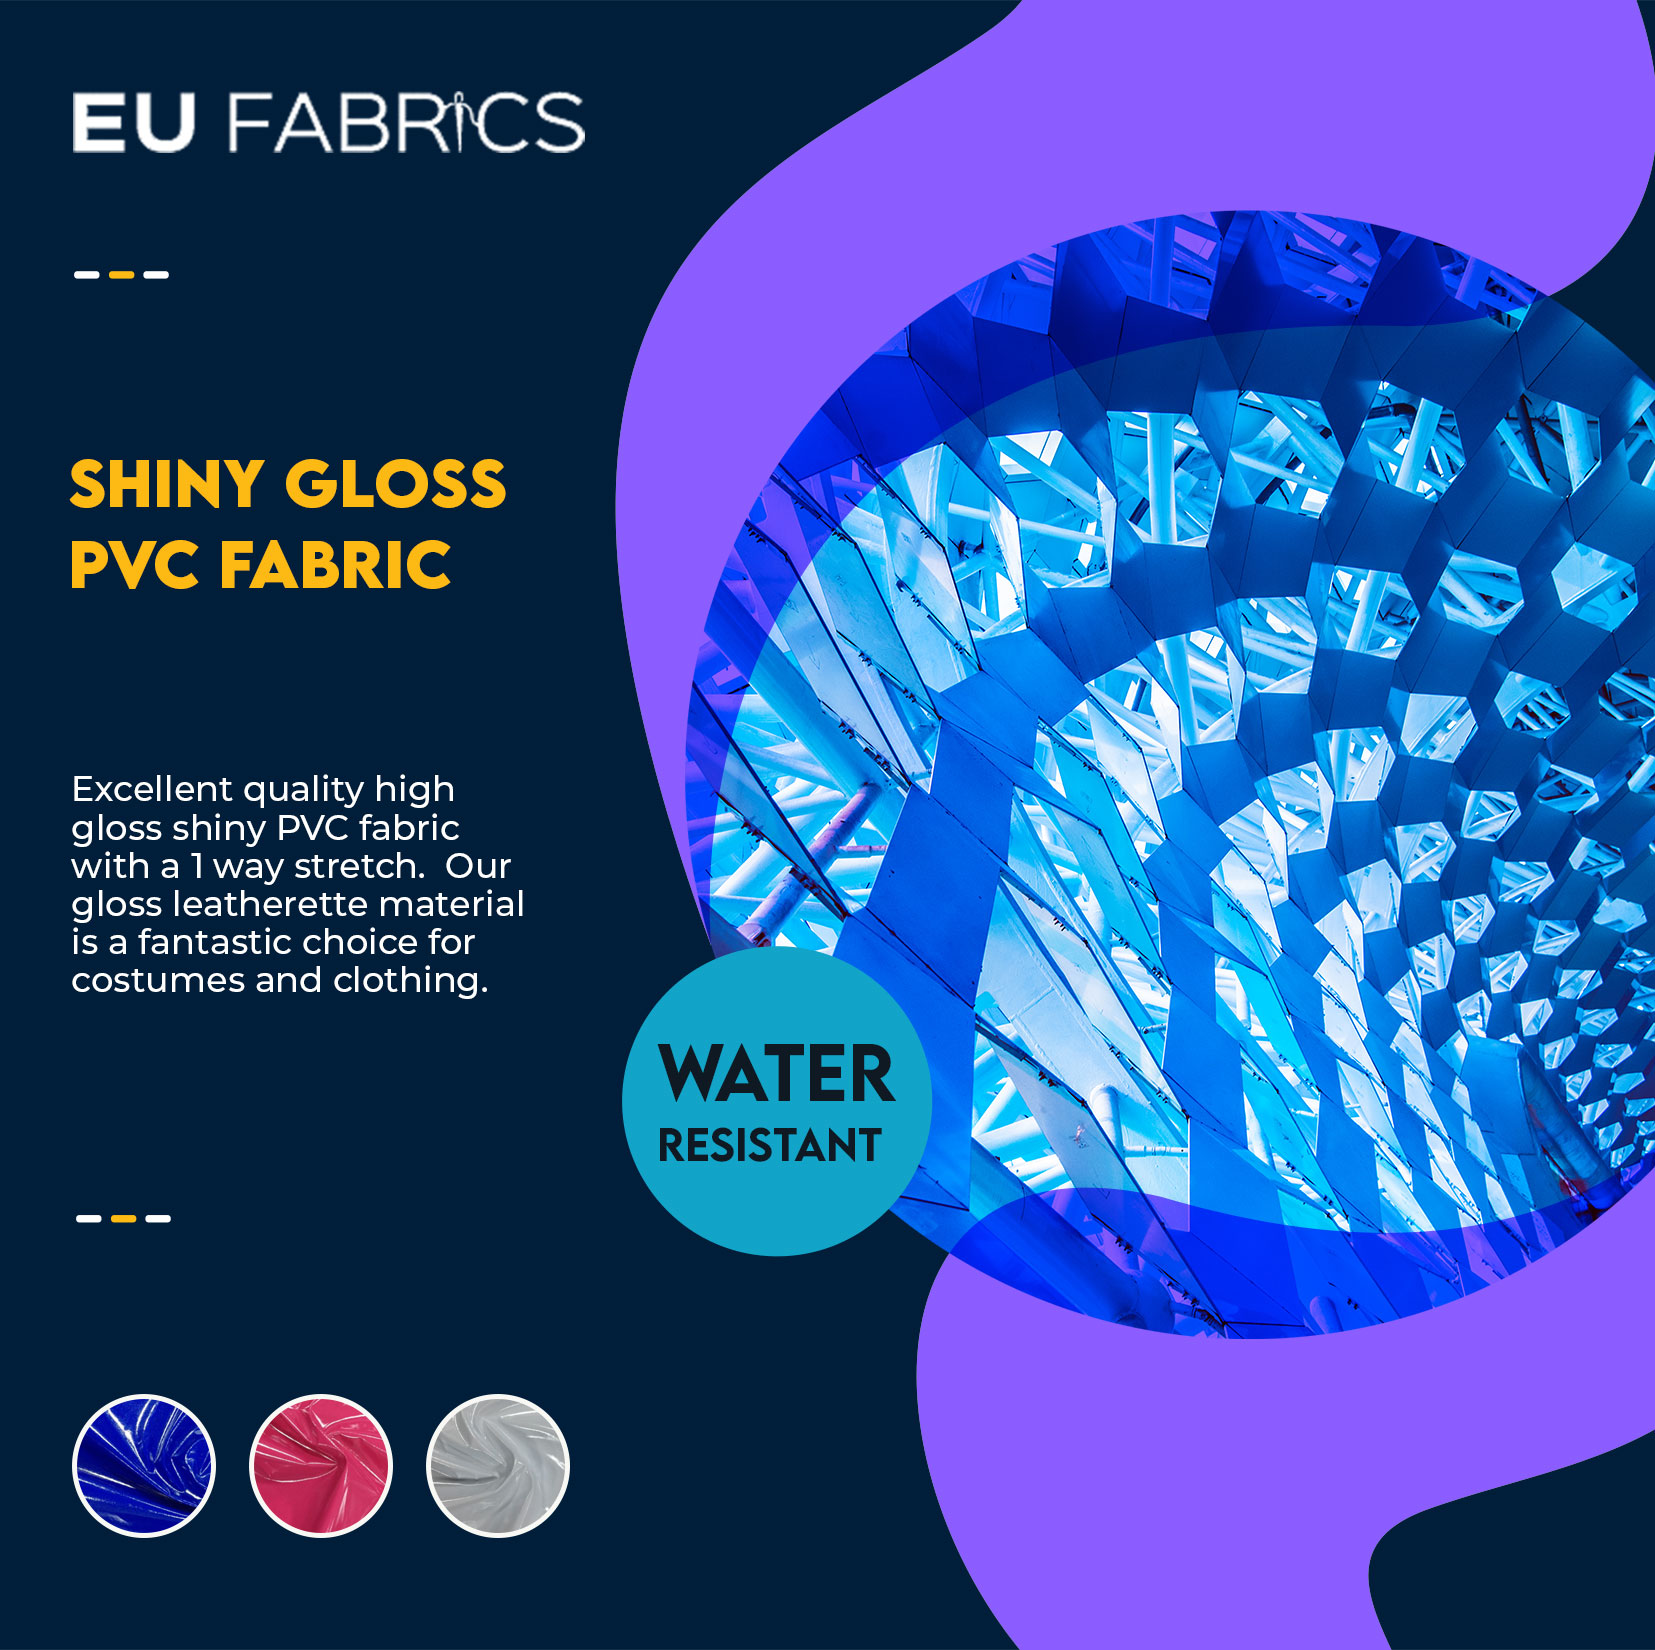 Shiny Gloss PVC Fabric